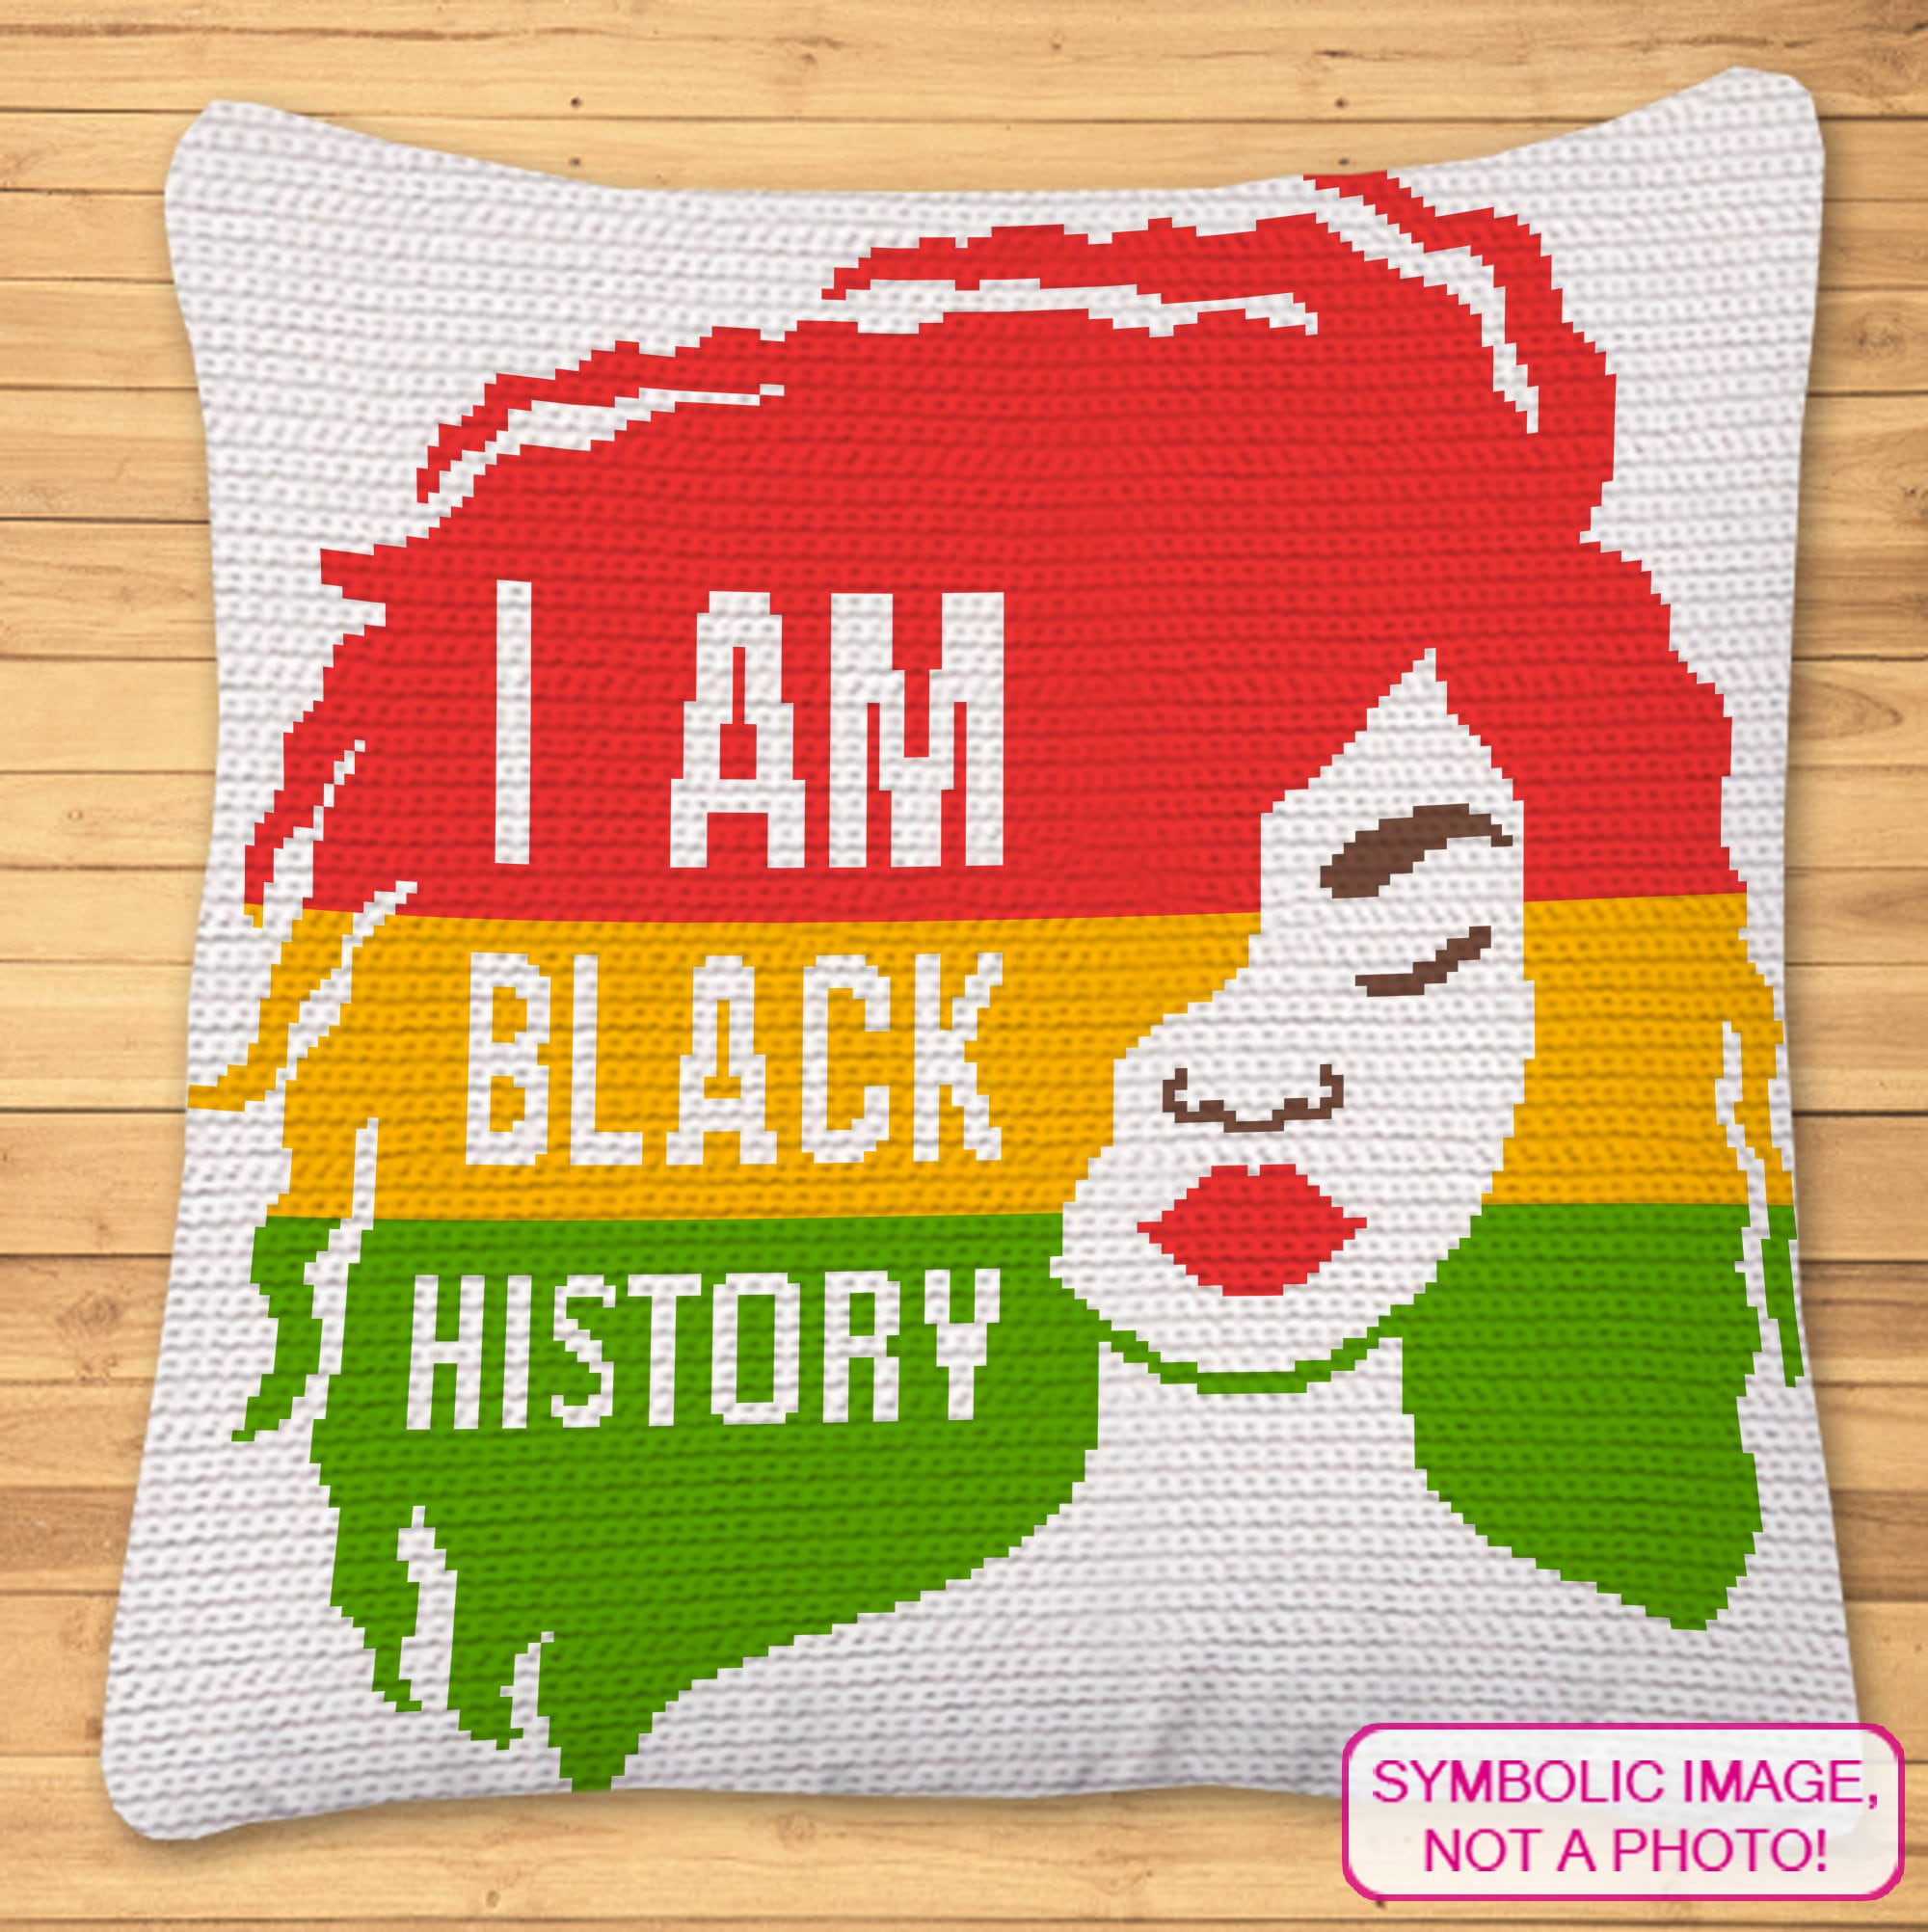 Natalie's Hama Beads - Black Polly Pocket for Black History Month